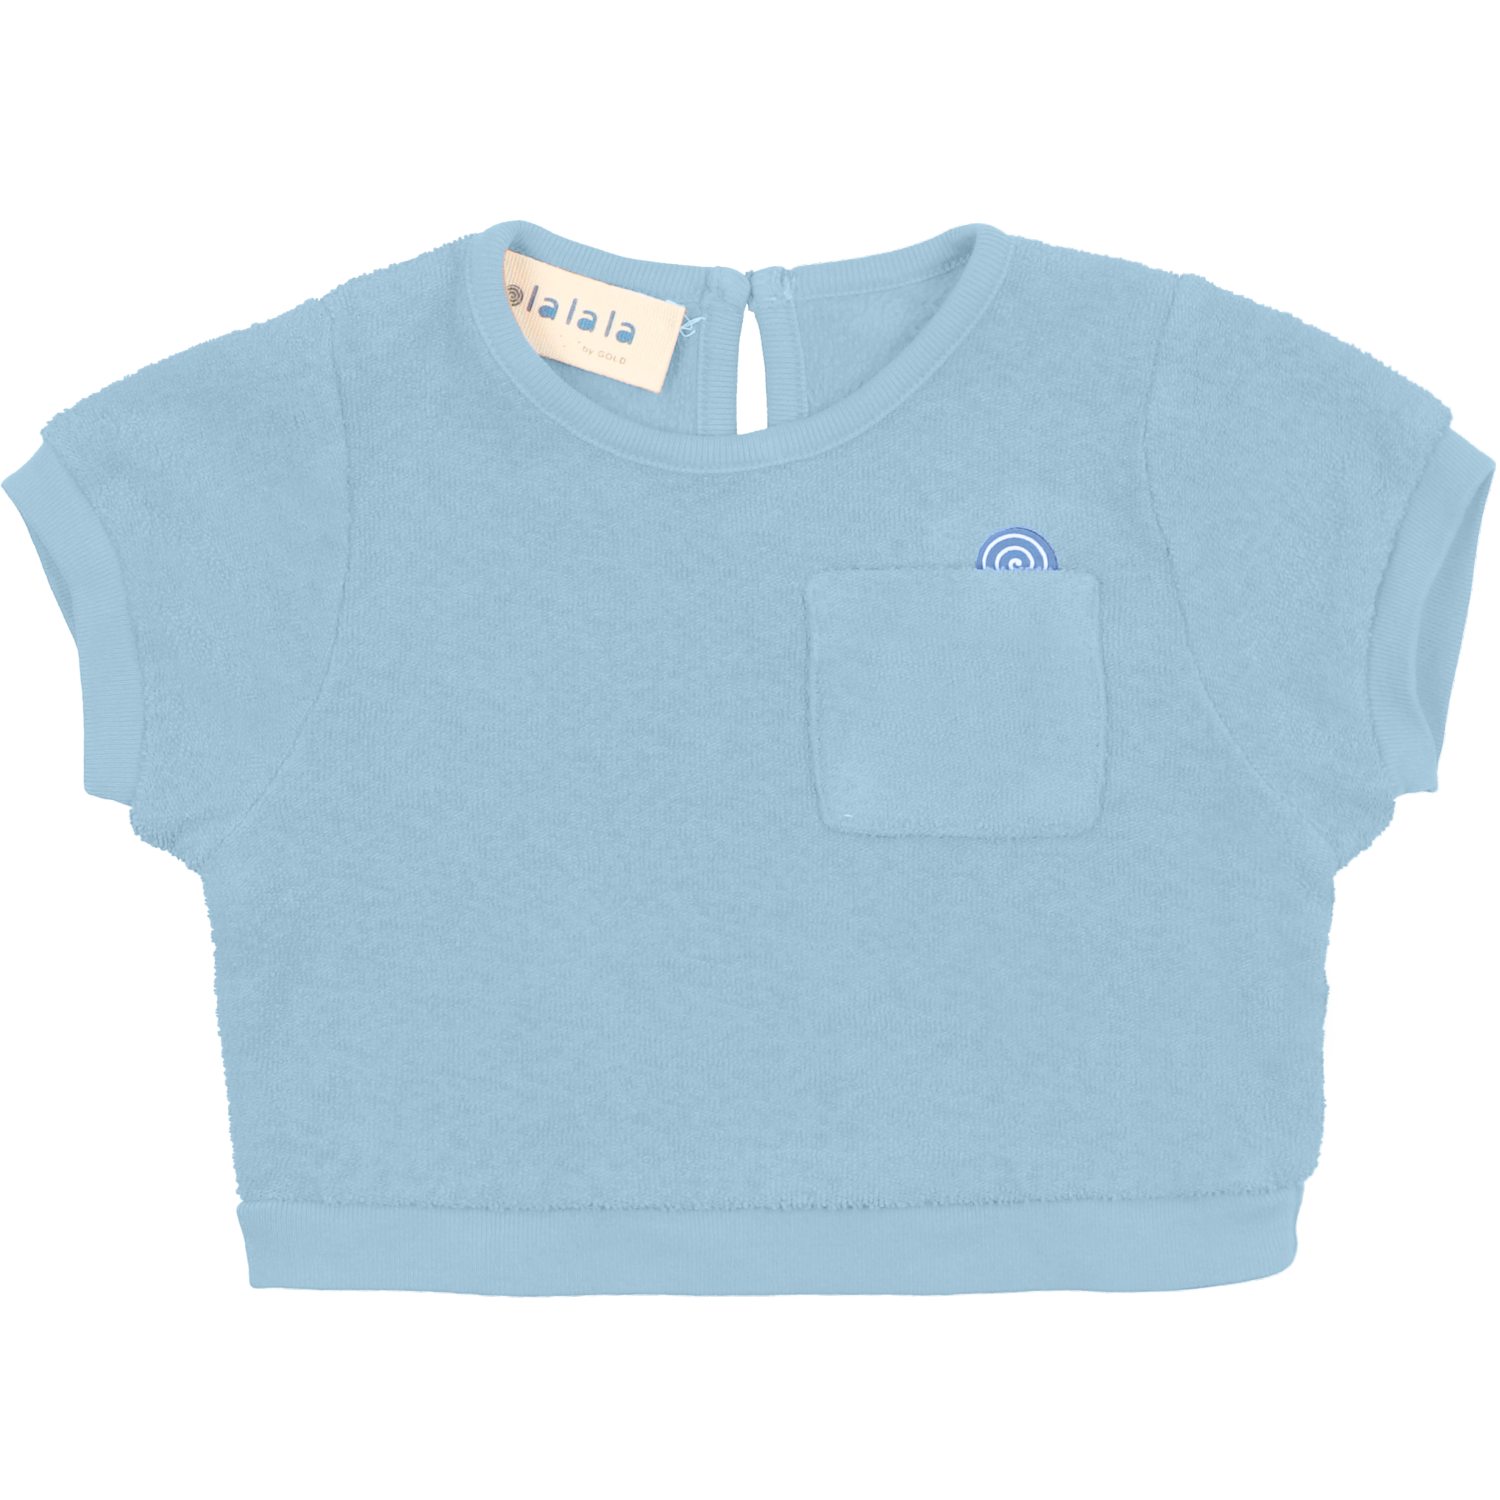 SARAH - Sponse sweater lichtblauw